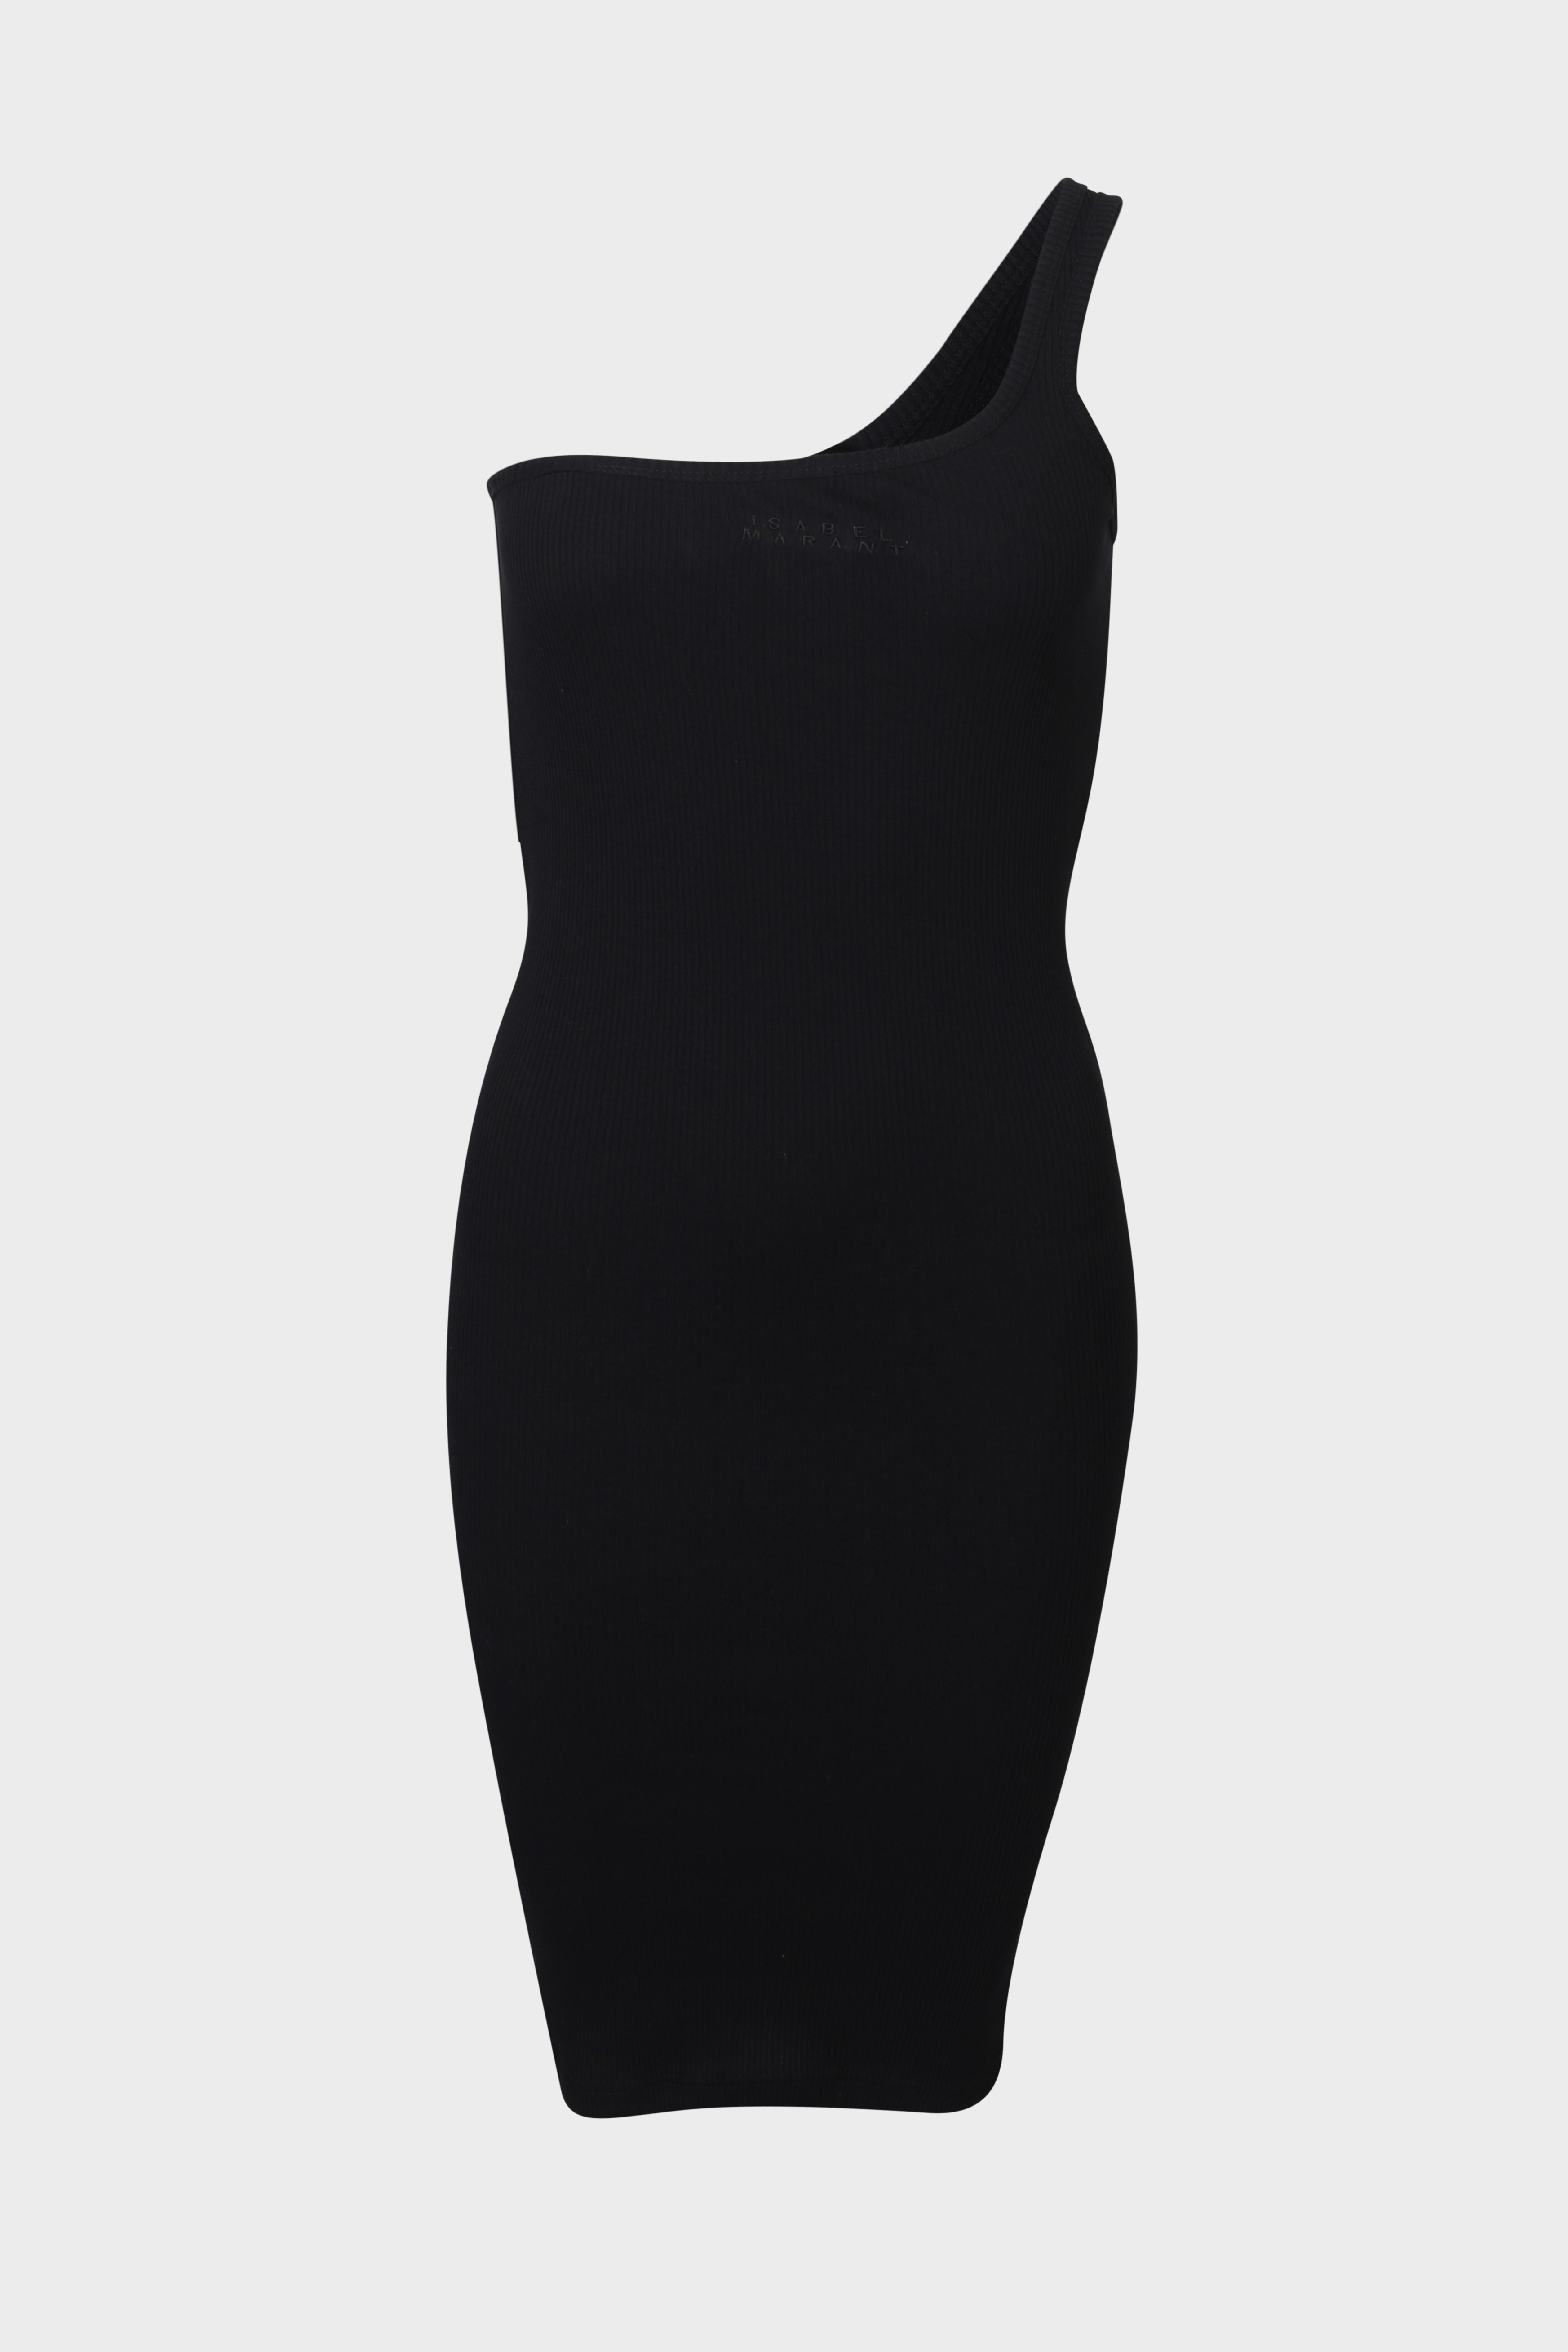 ISABEL MARANT ÉTOILE Tamaki Dress in Black L